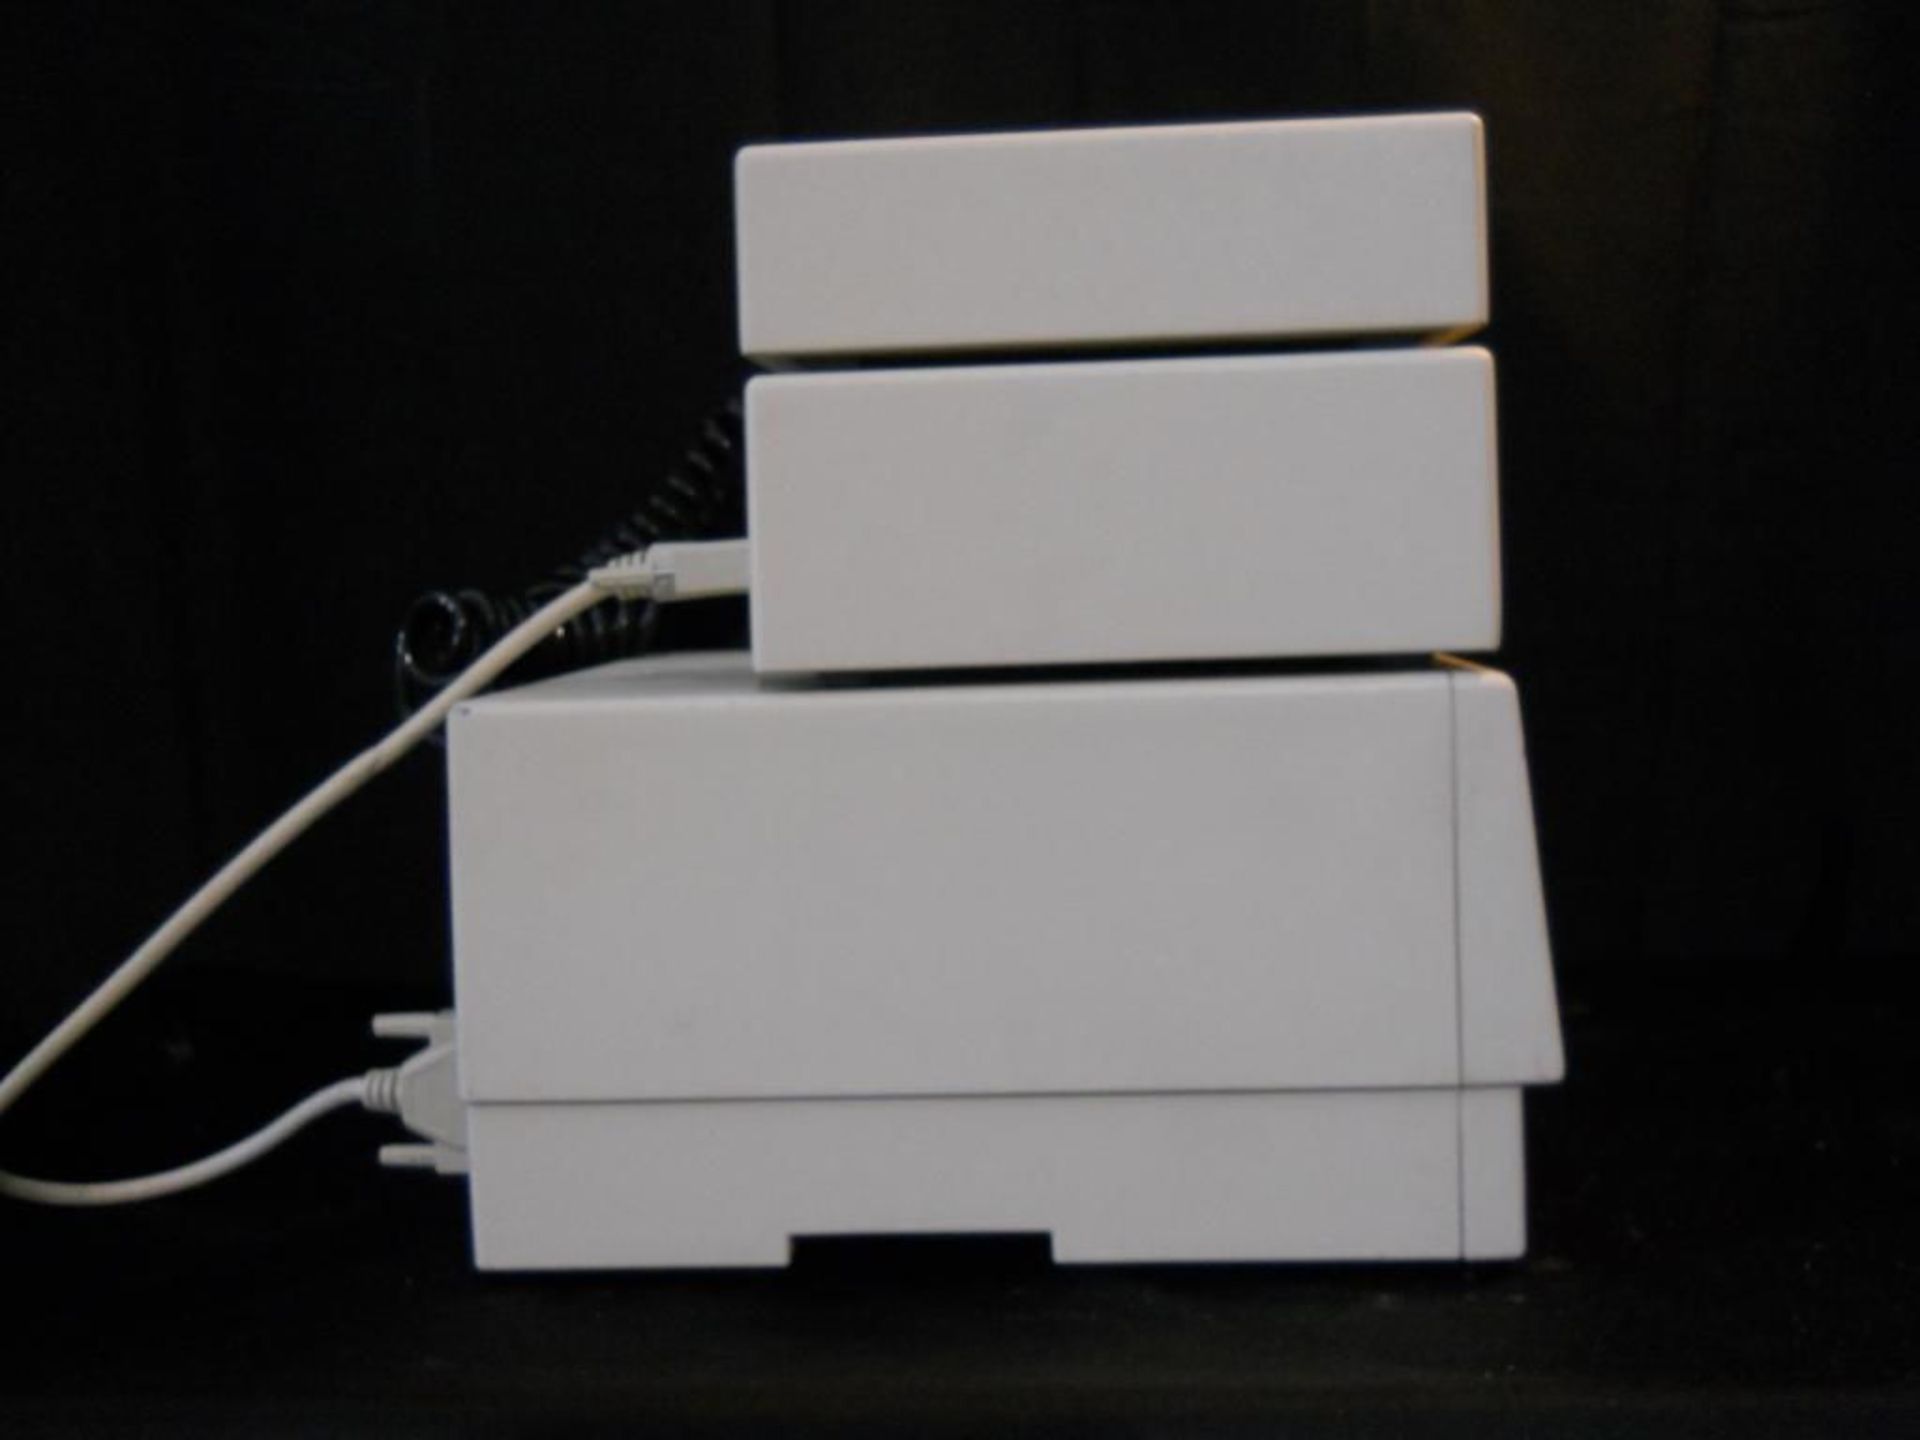 BIO-RAD Gene Pulser II, Pulse Controller II & Capacitance Extender II (BioRad), Qty 1, 321469036576 - Image 9 of 9